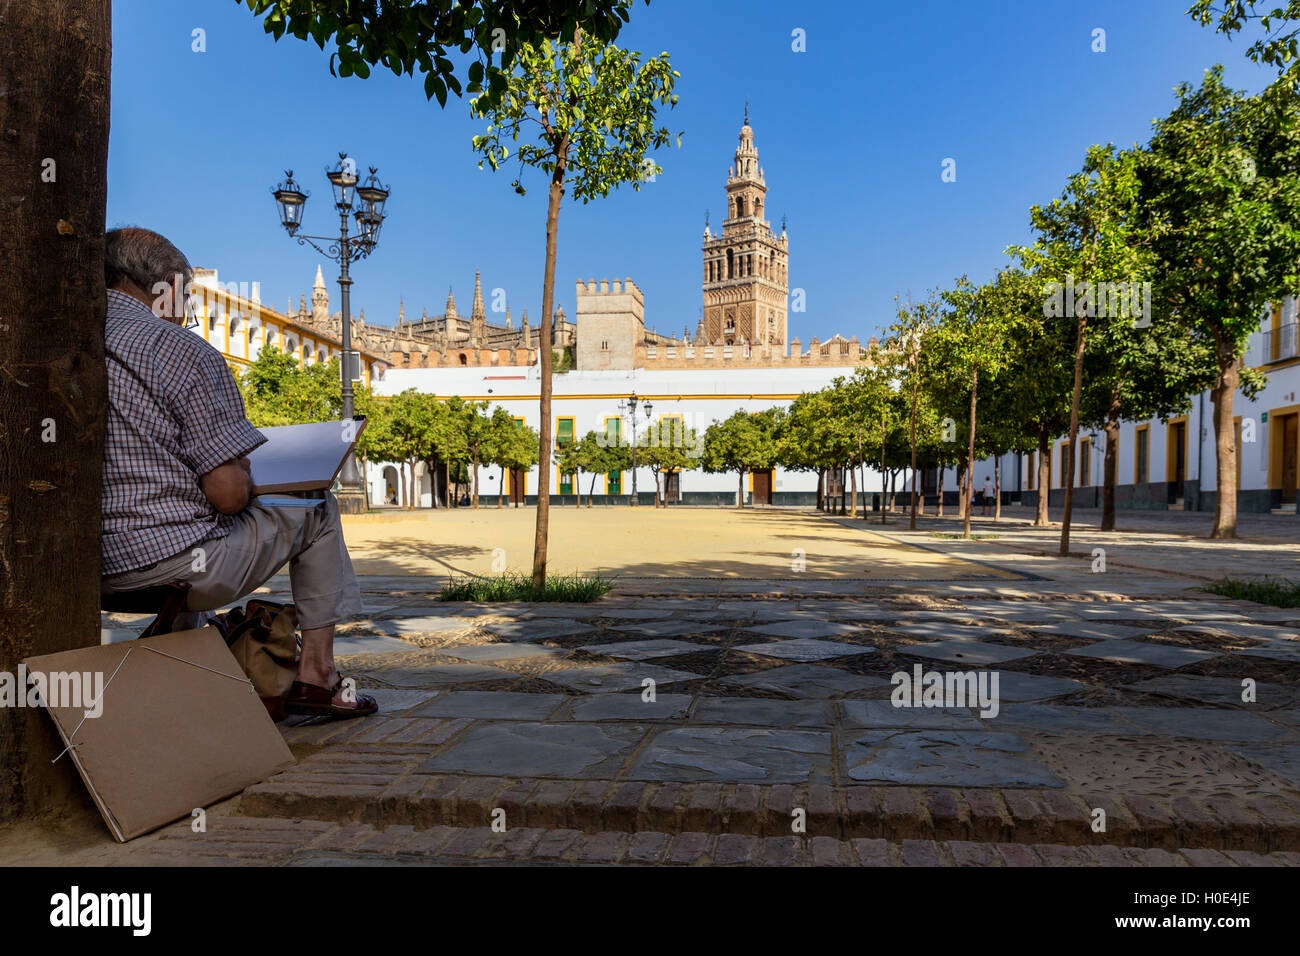 Elderly man painting Plaza del Patio de Banderas, Seville, Seville province, Andalusia, Spain Stock Photo